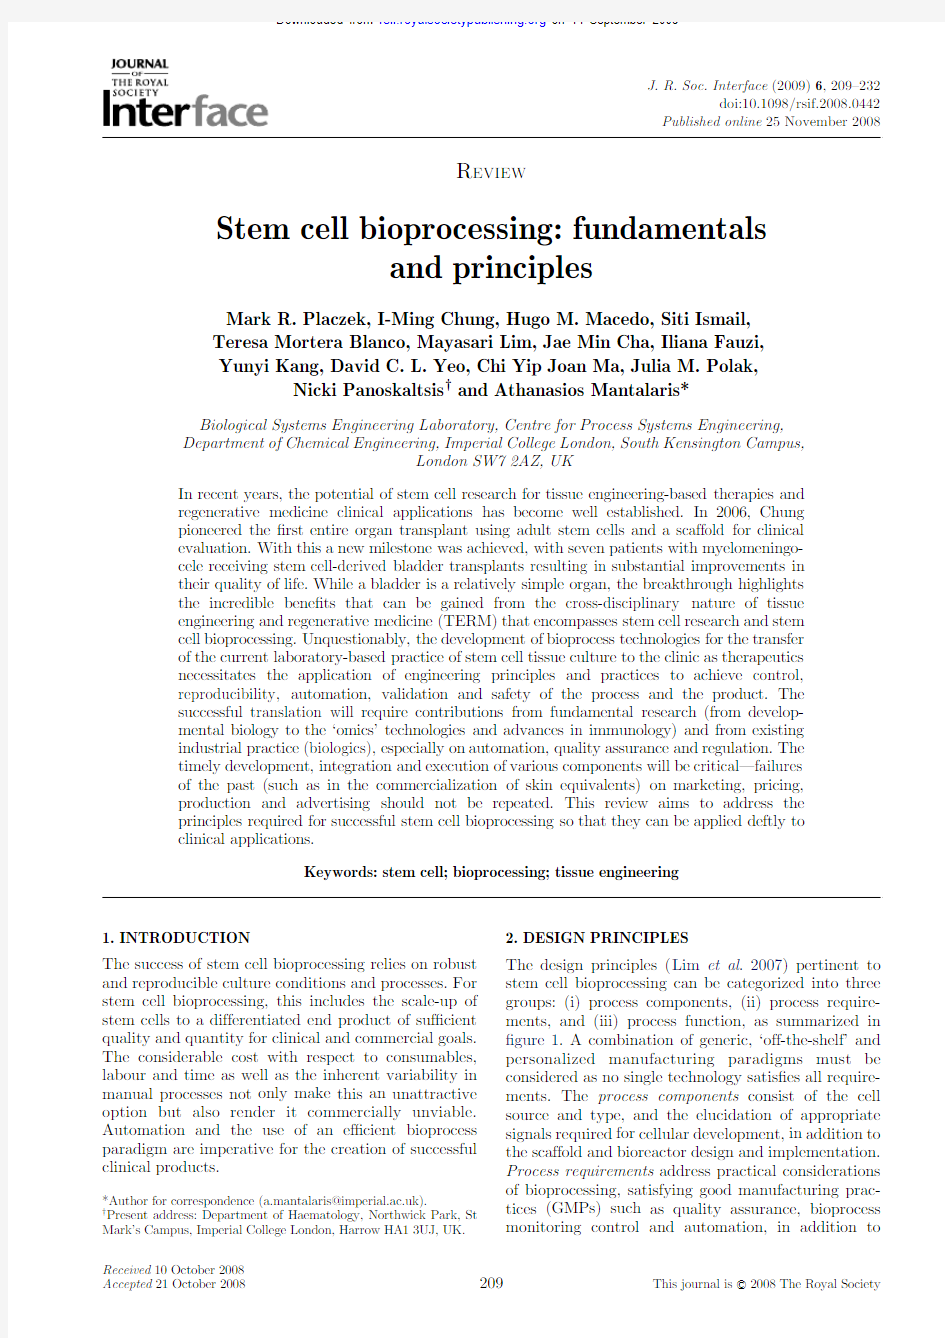 Stem cell bioprocessing